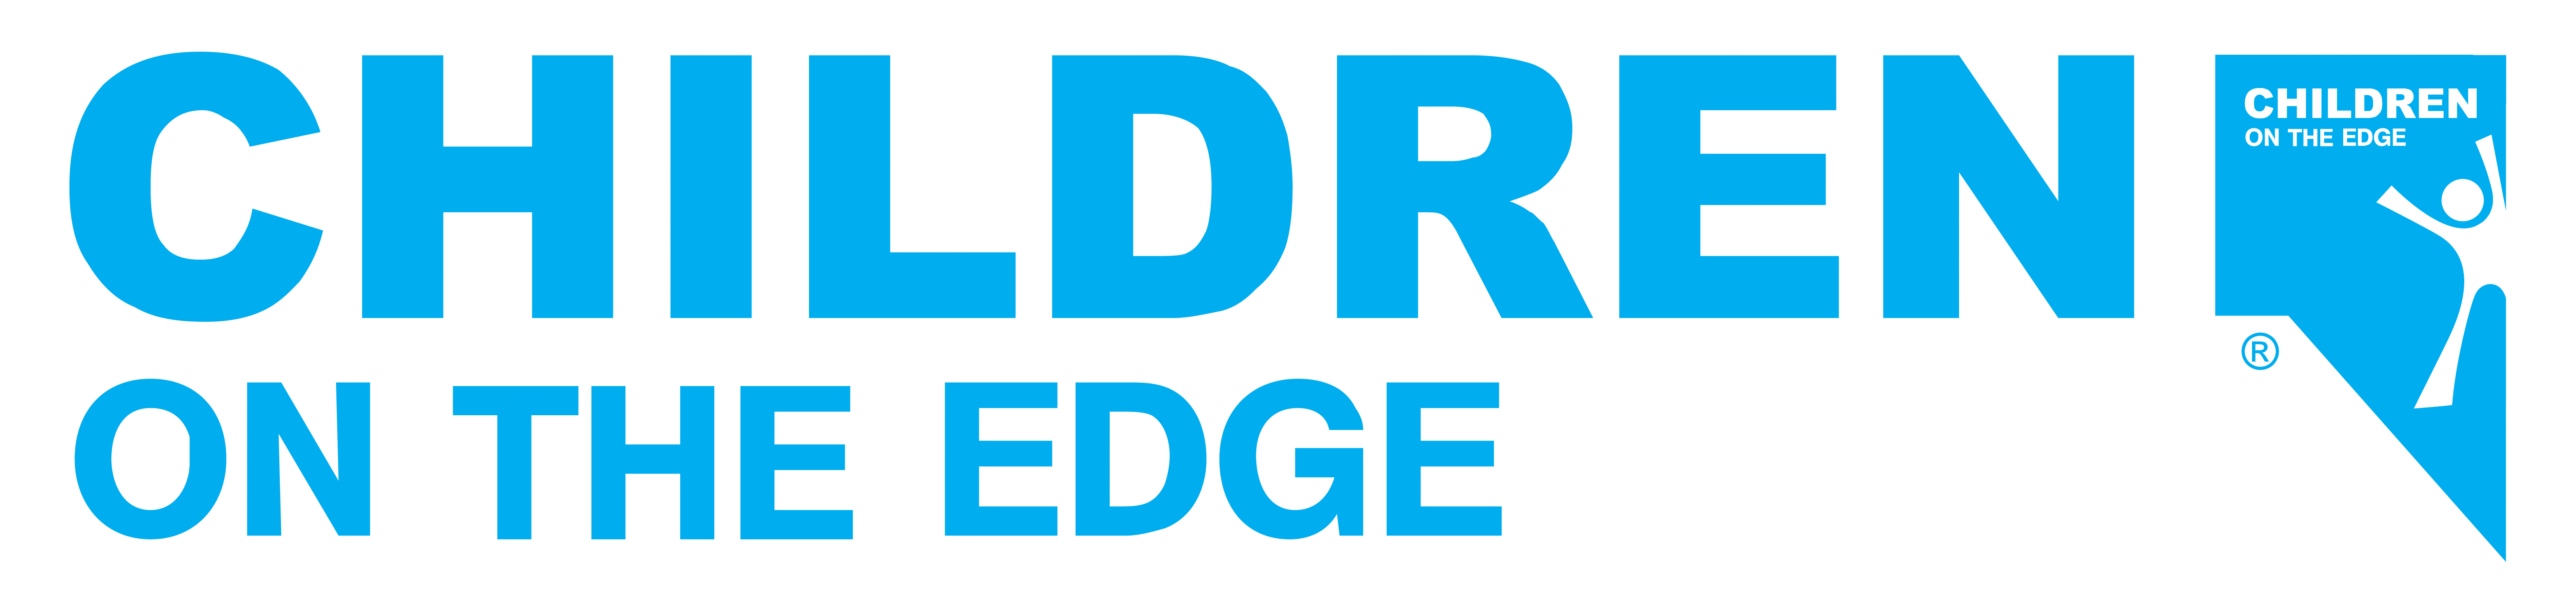 Children on the Edge Raffle logo